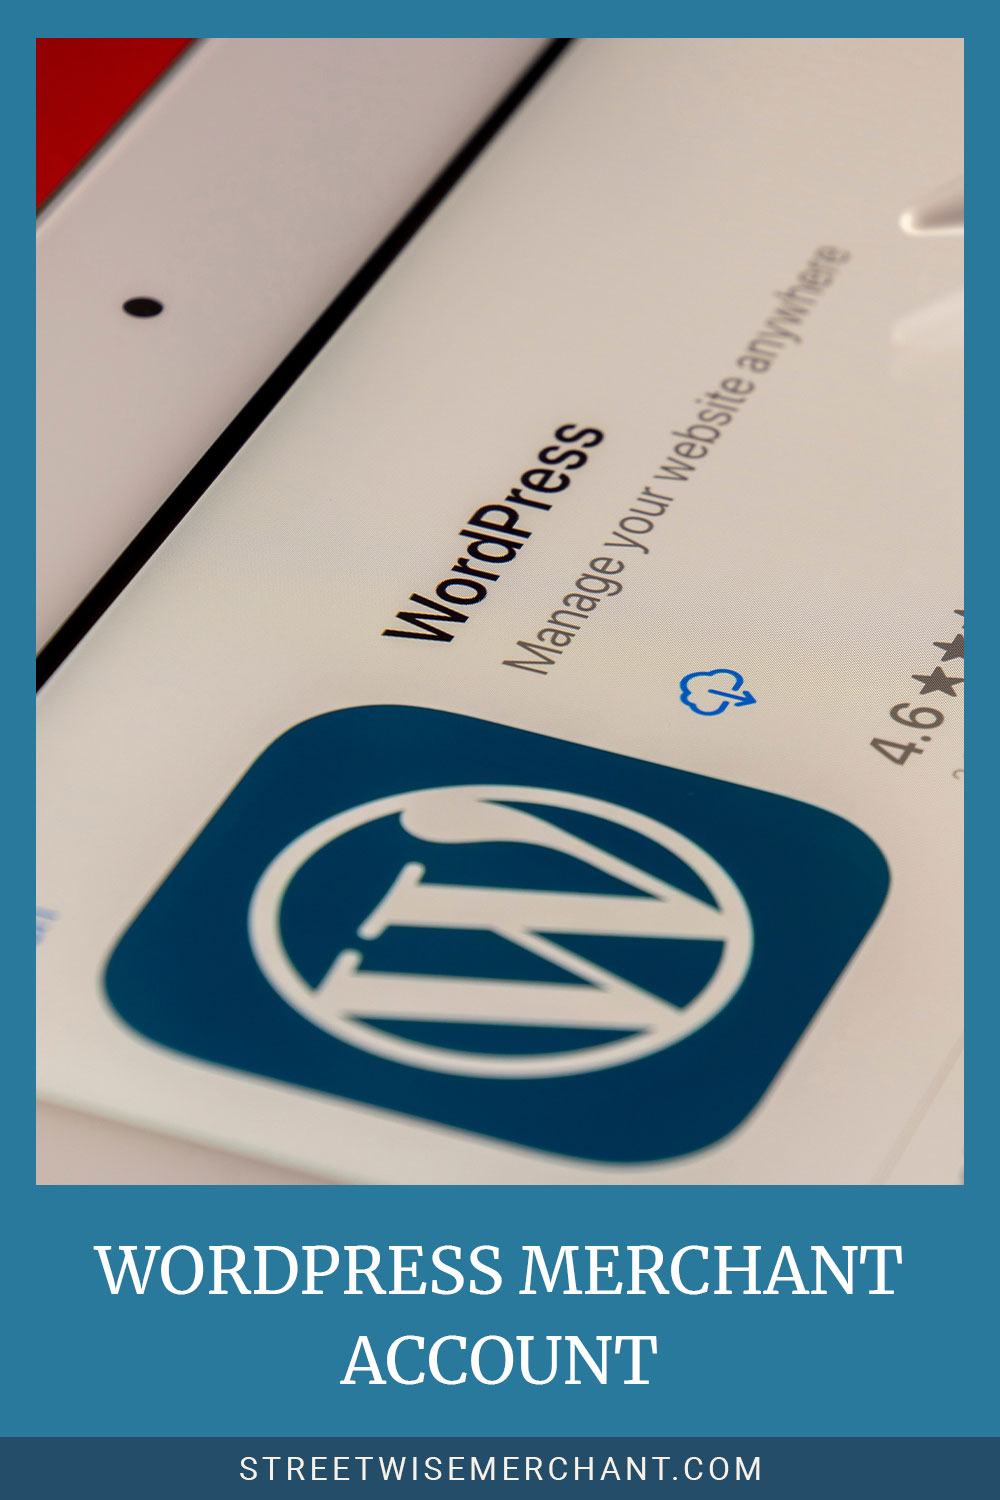 Wordpress logo on a screen - WordPress Merchant Account